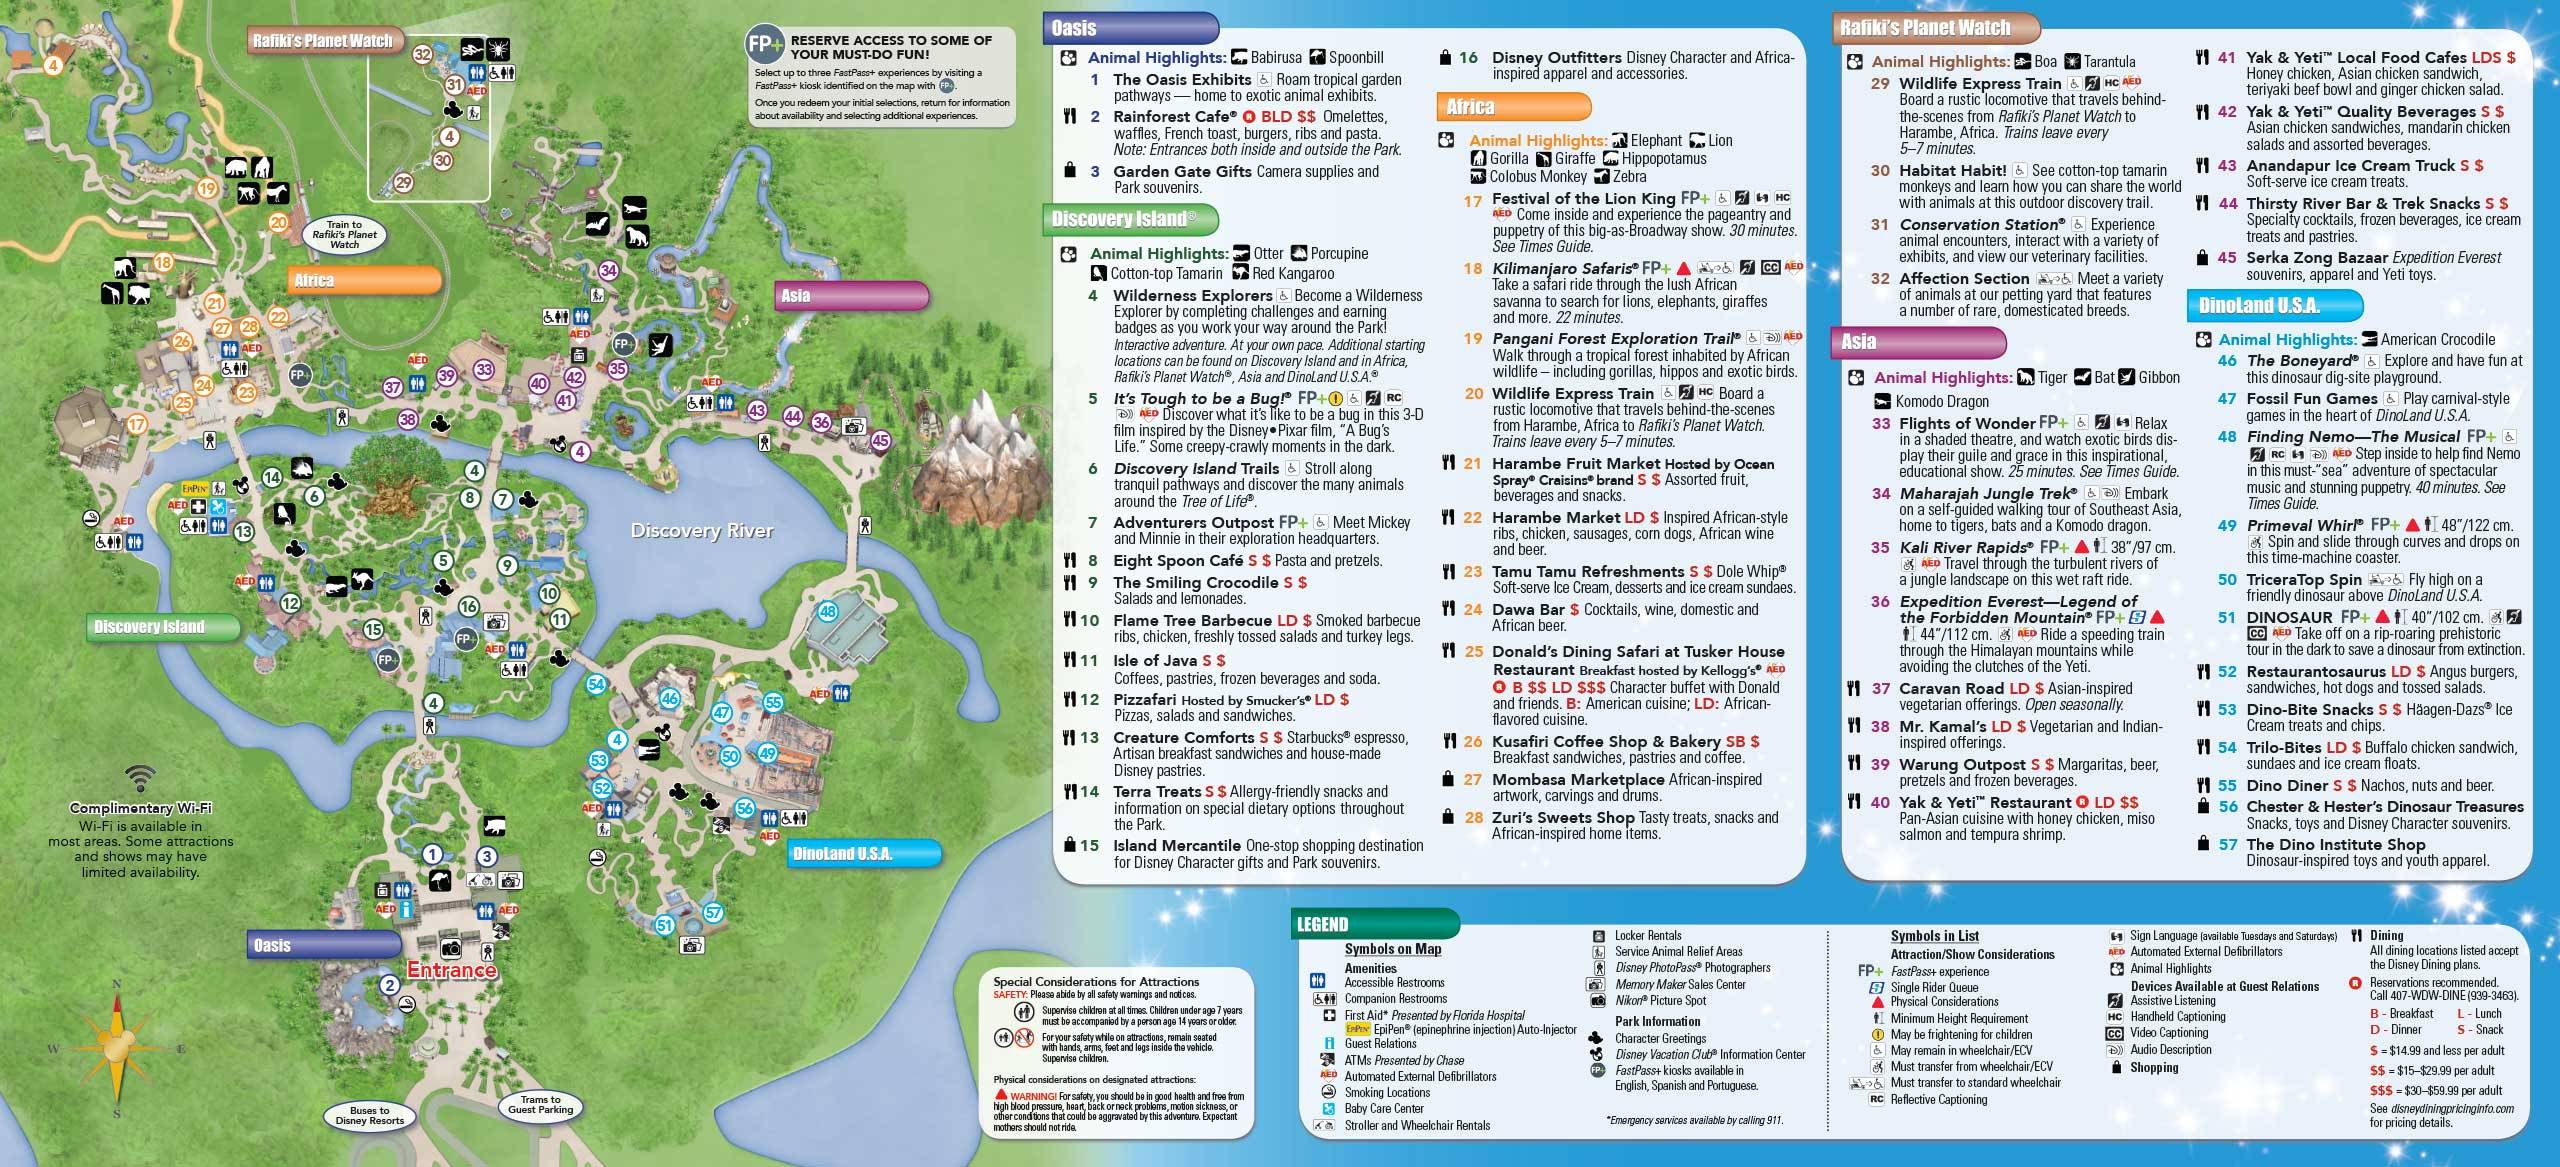 Disney's Animal Kingdom Guide Map January 2016 - Back